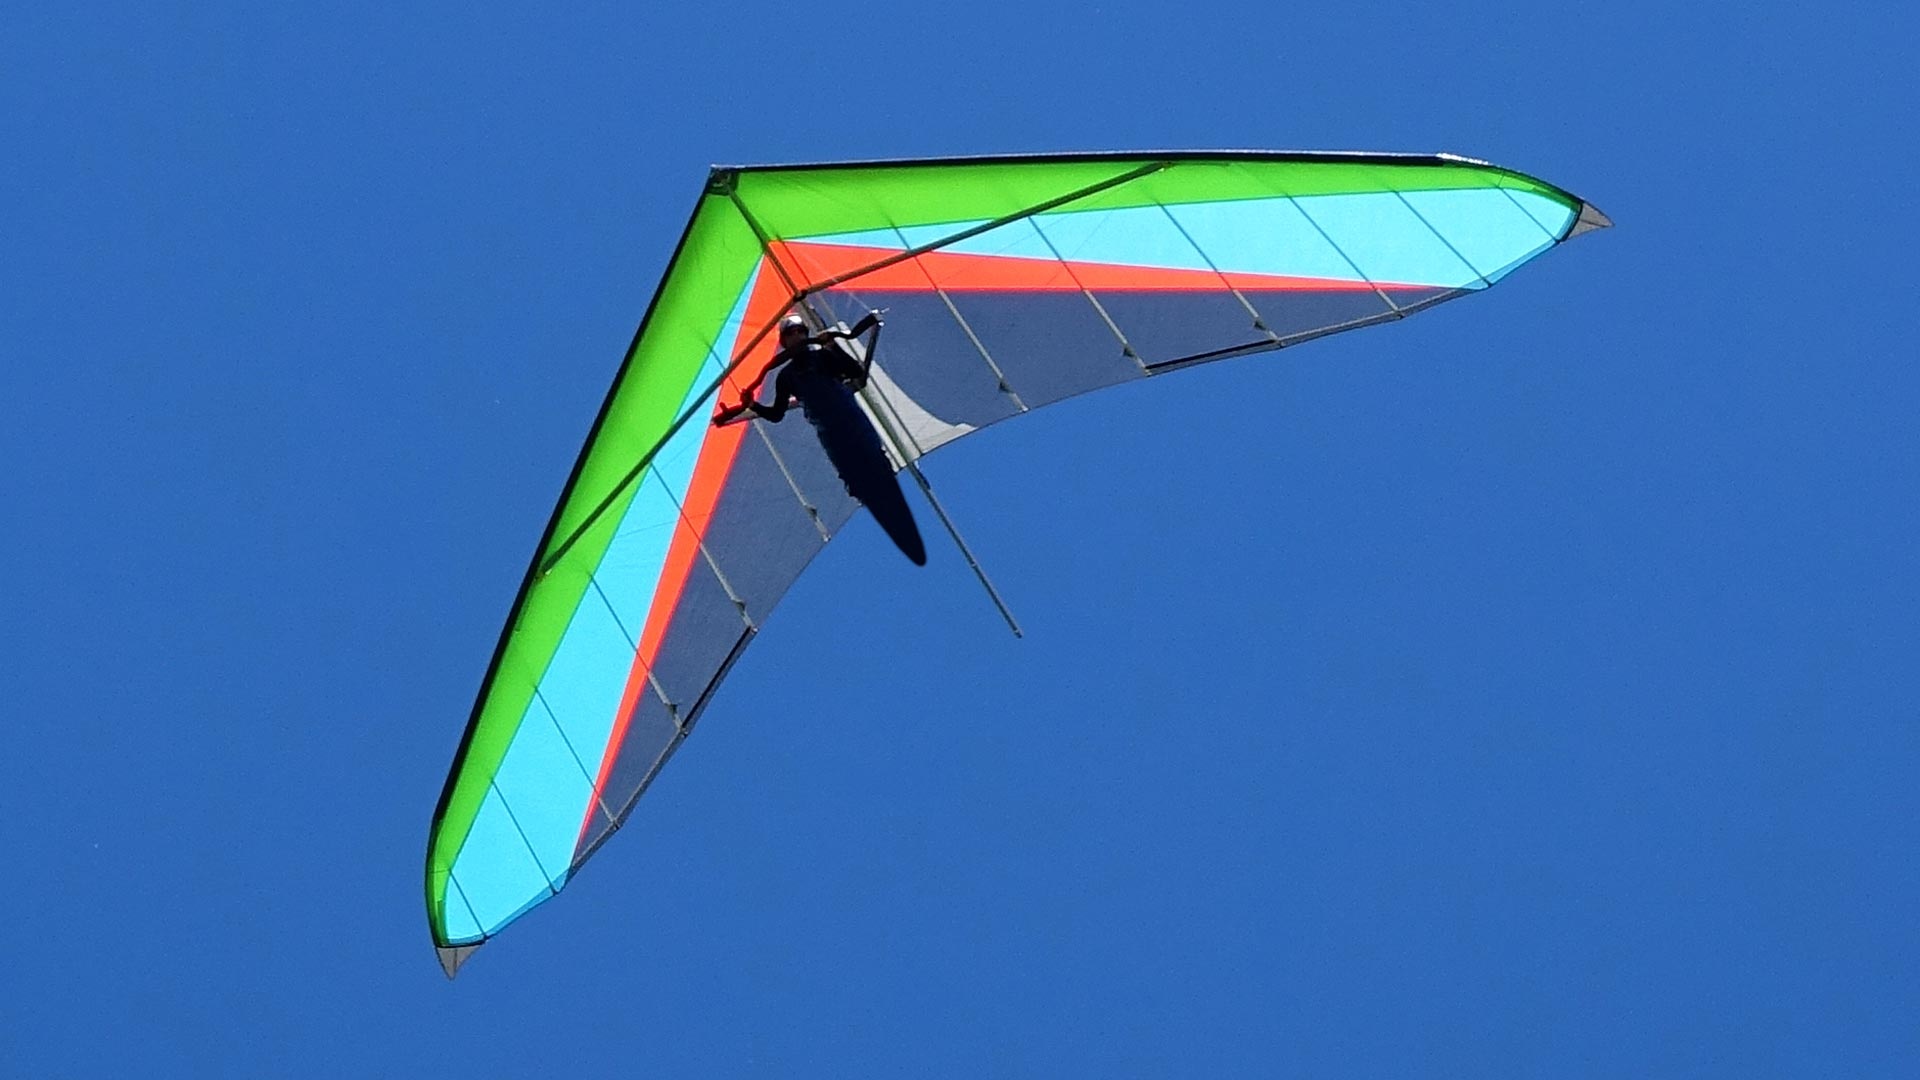 Hang Gliding: Icaro 2000, Piuma, A basic hang glider, Floating crossbar. 1920x1080 Full HD Wallpaper.